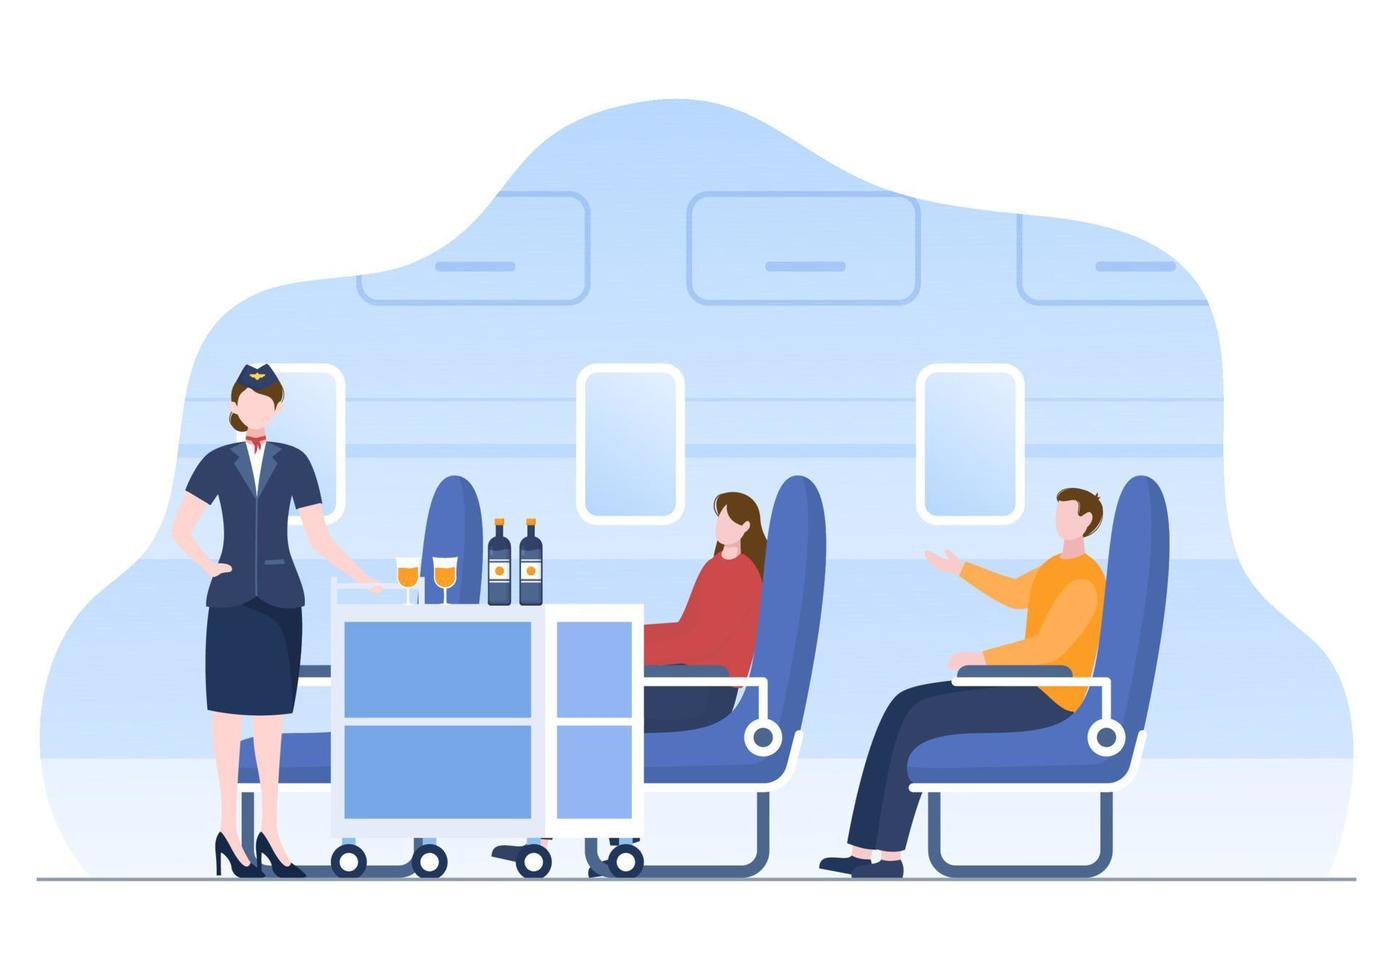 Flight Attendants Serve Passengers by Offering Drinks on Board in Cartoon Vector Illustration